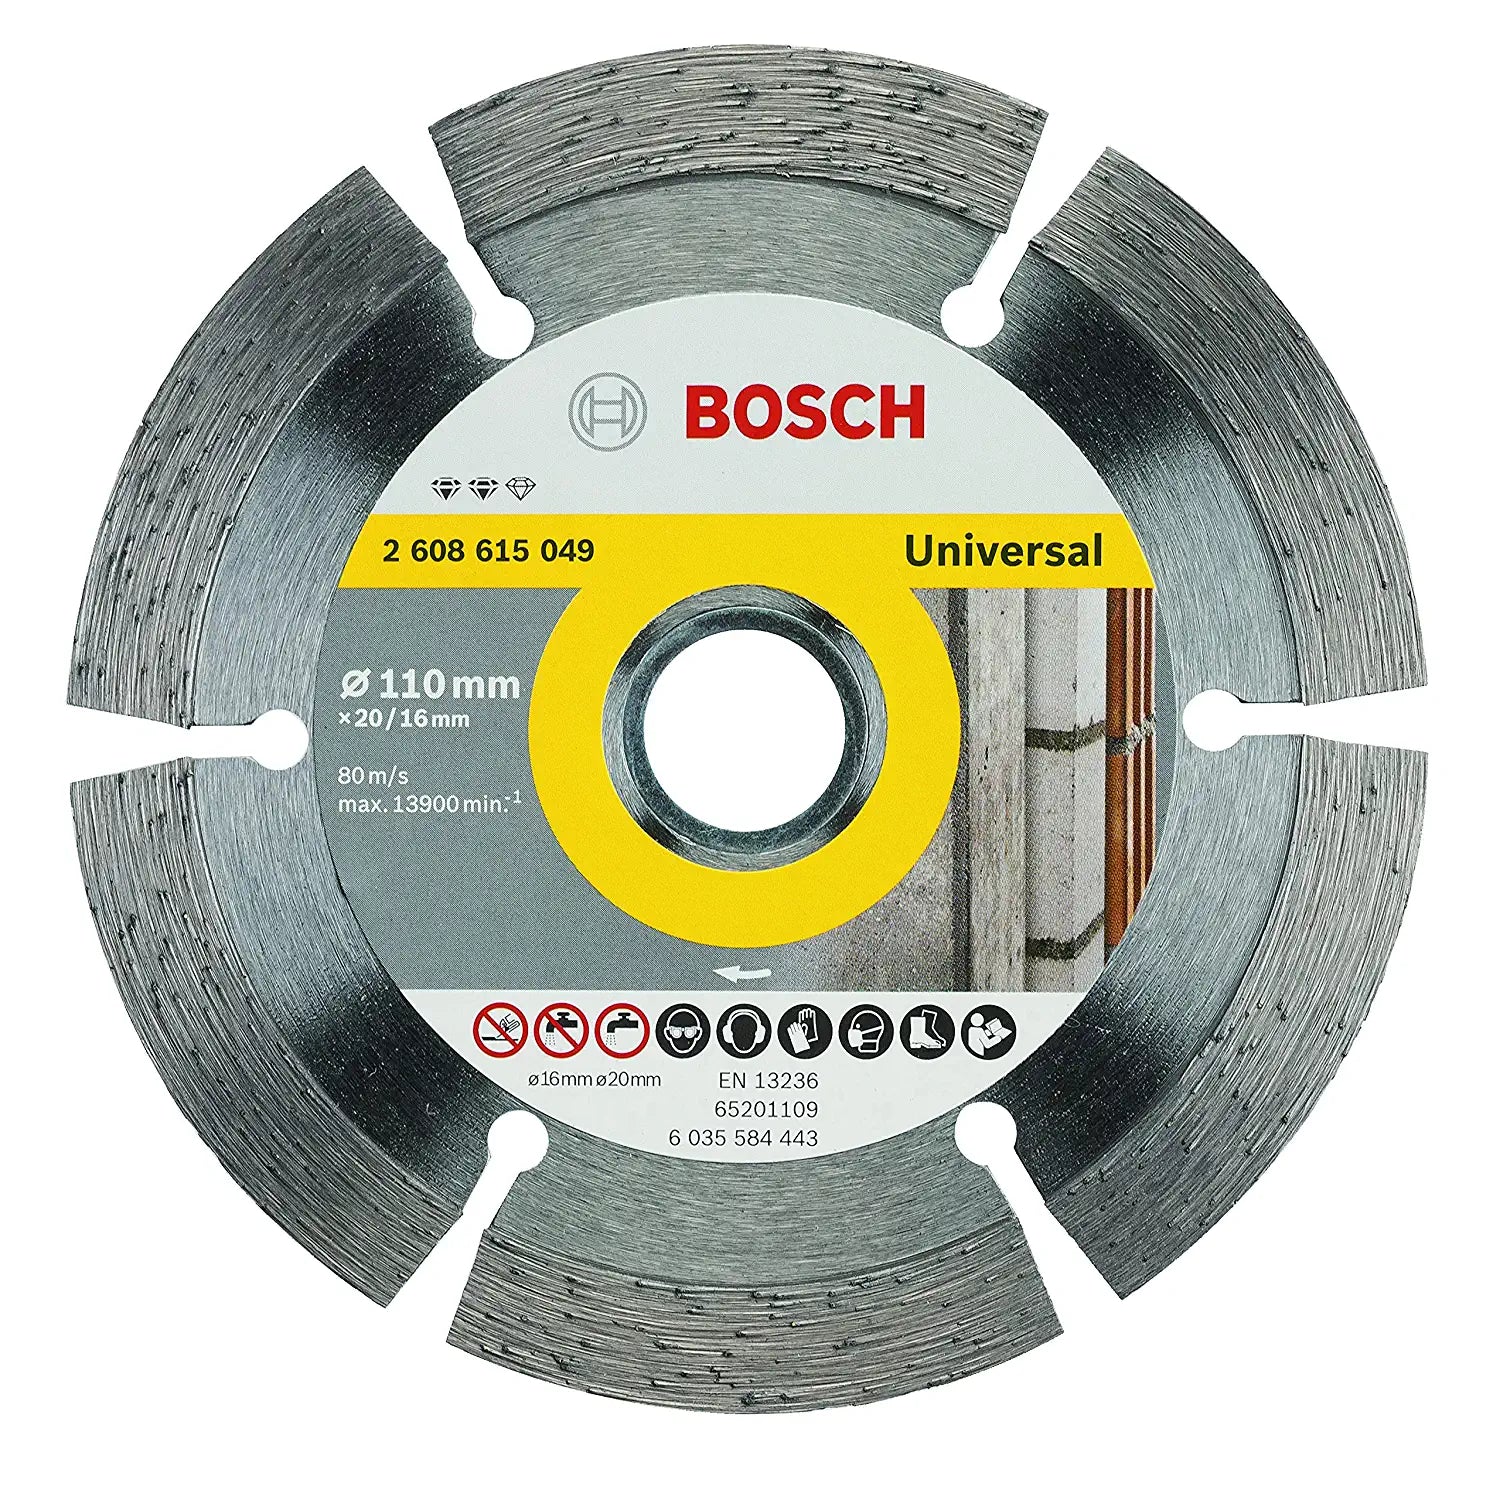 Bosch MM 2 Laser Support Silver